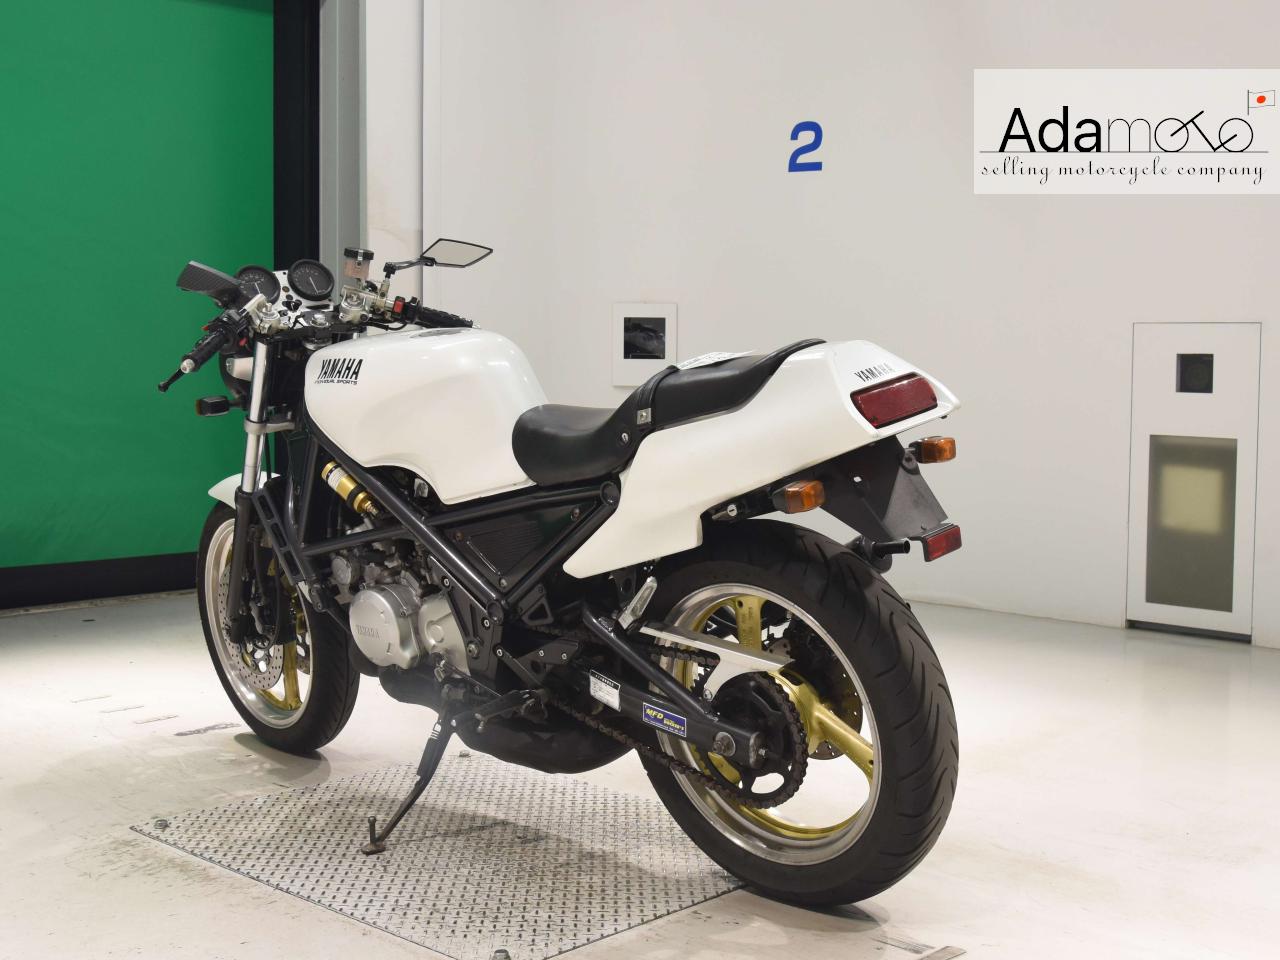 Yamaha R1 Z - Adamoto - Motorcycles from Japan